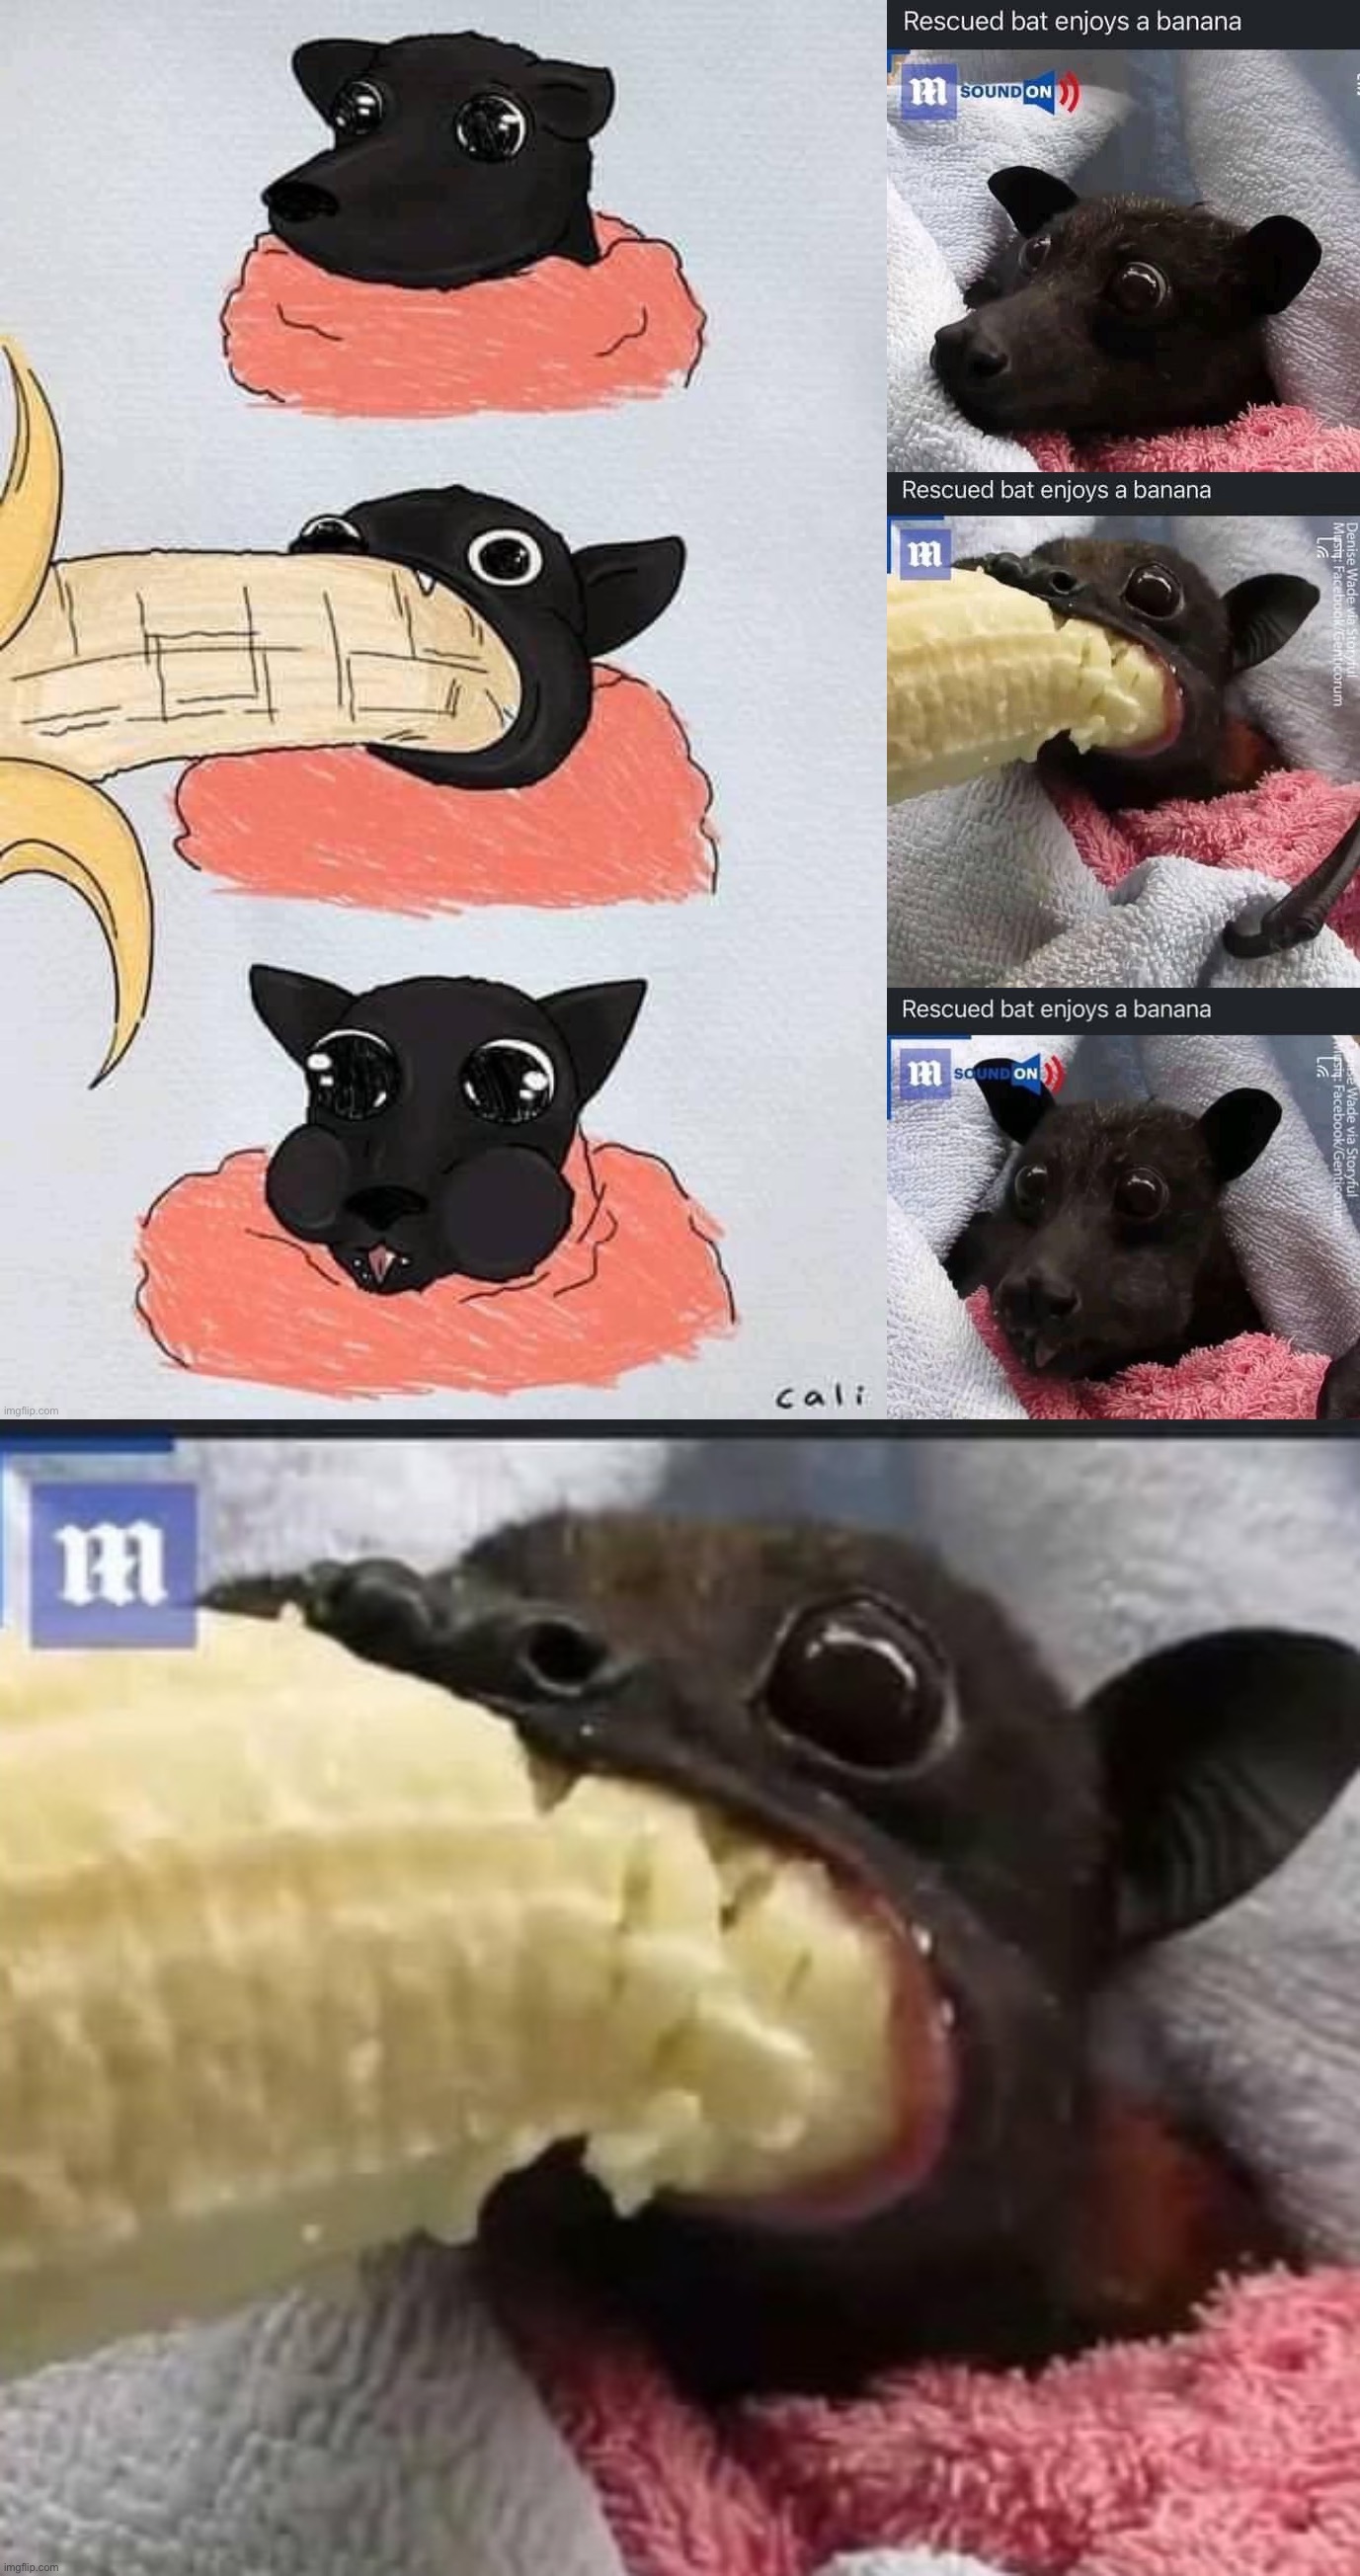 wot | image tagged in rescued bat enjoys a banana,bat,banana,bananas,art,100 | made w/ Imgflip meme maker